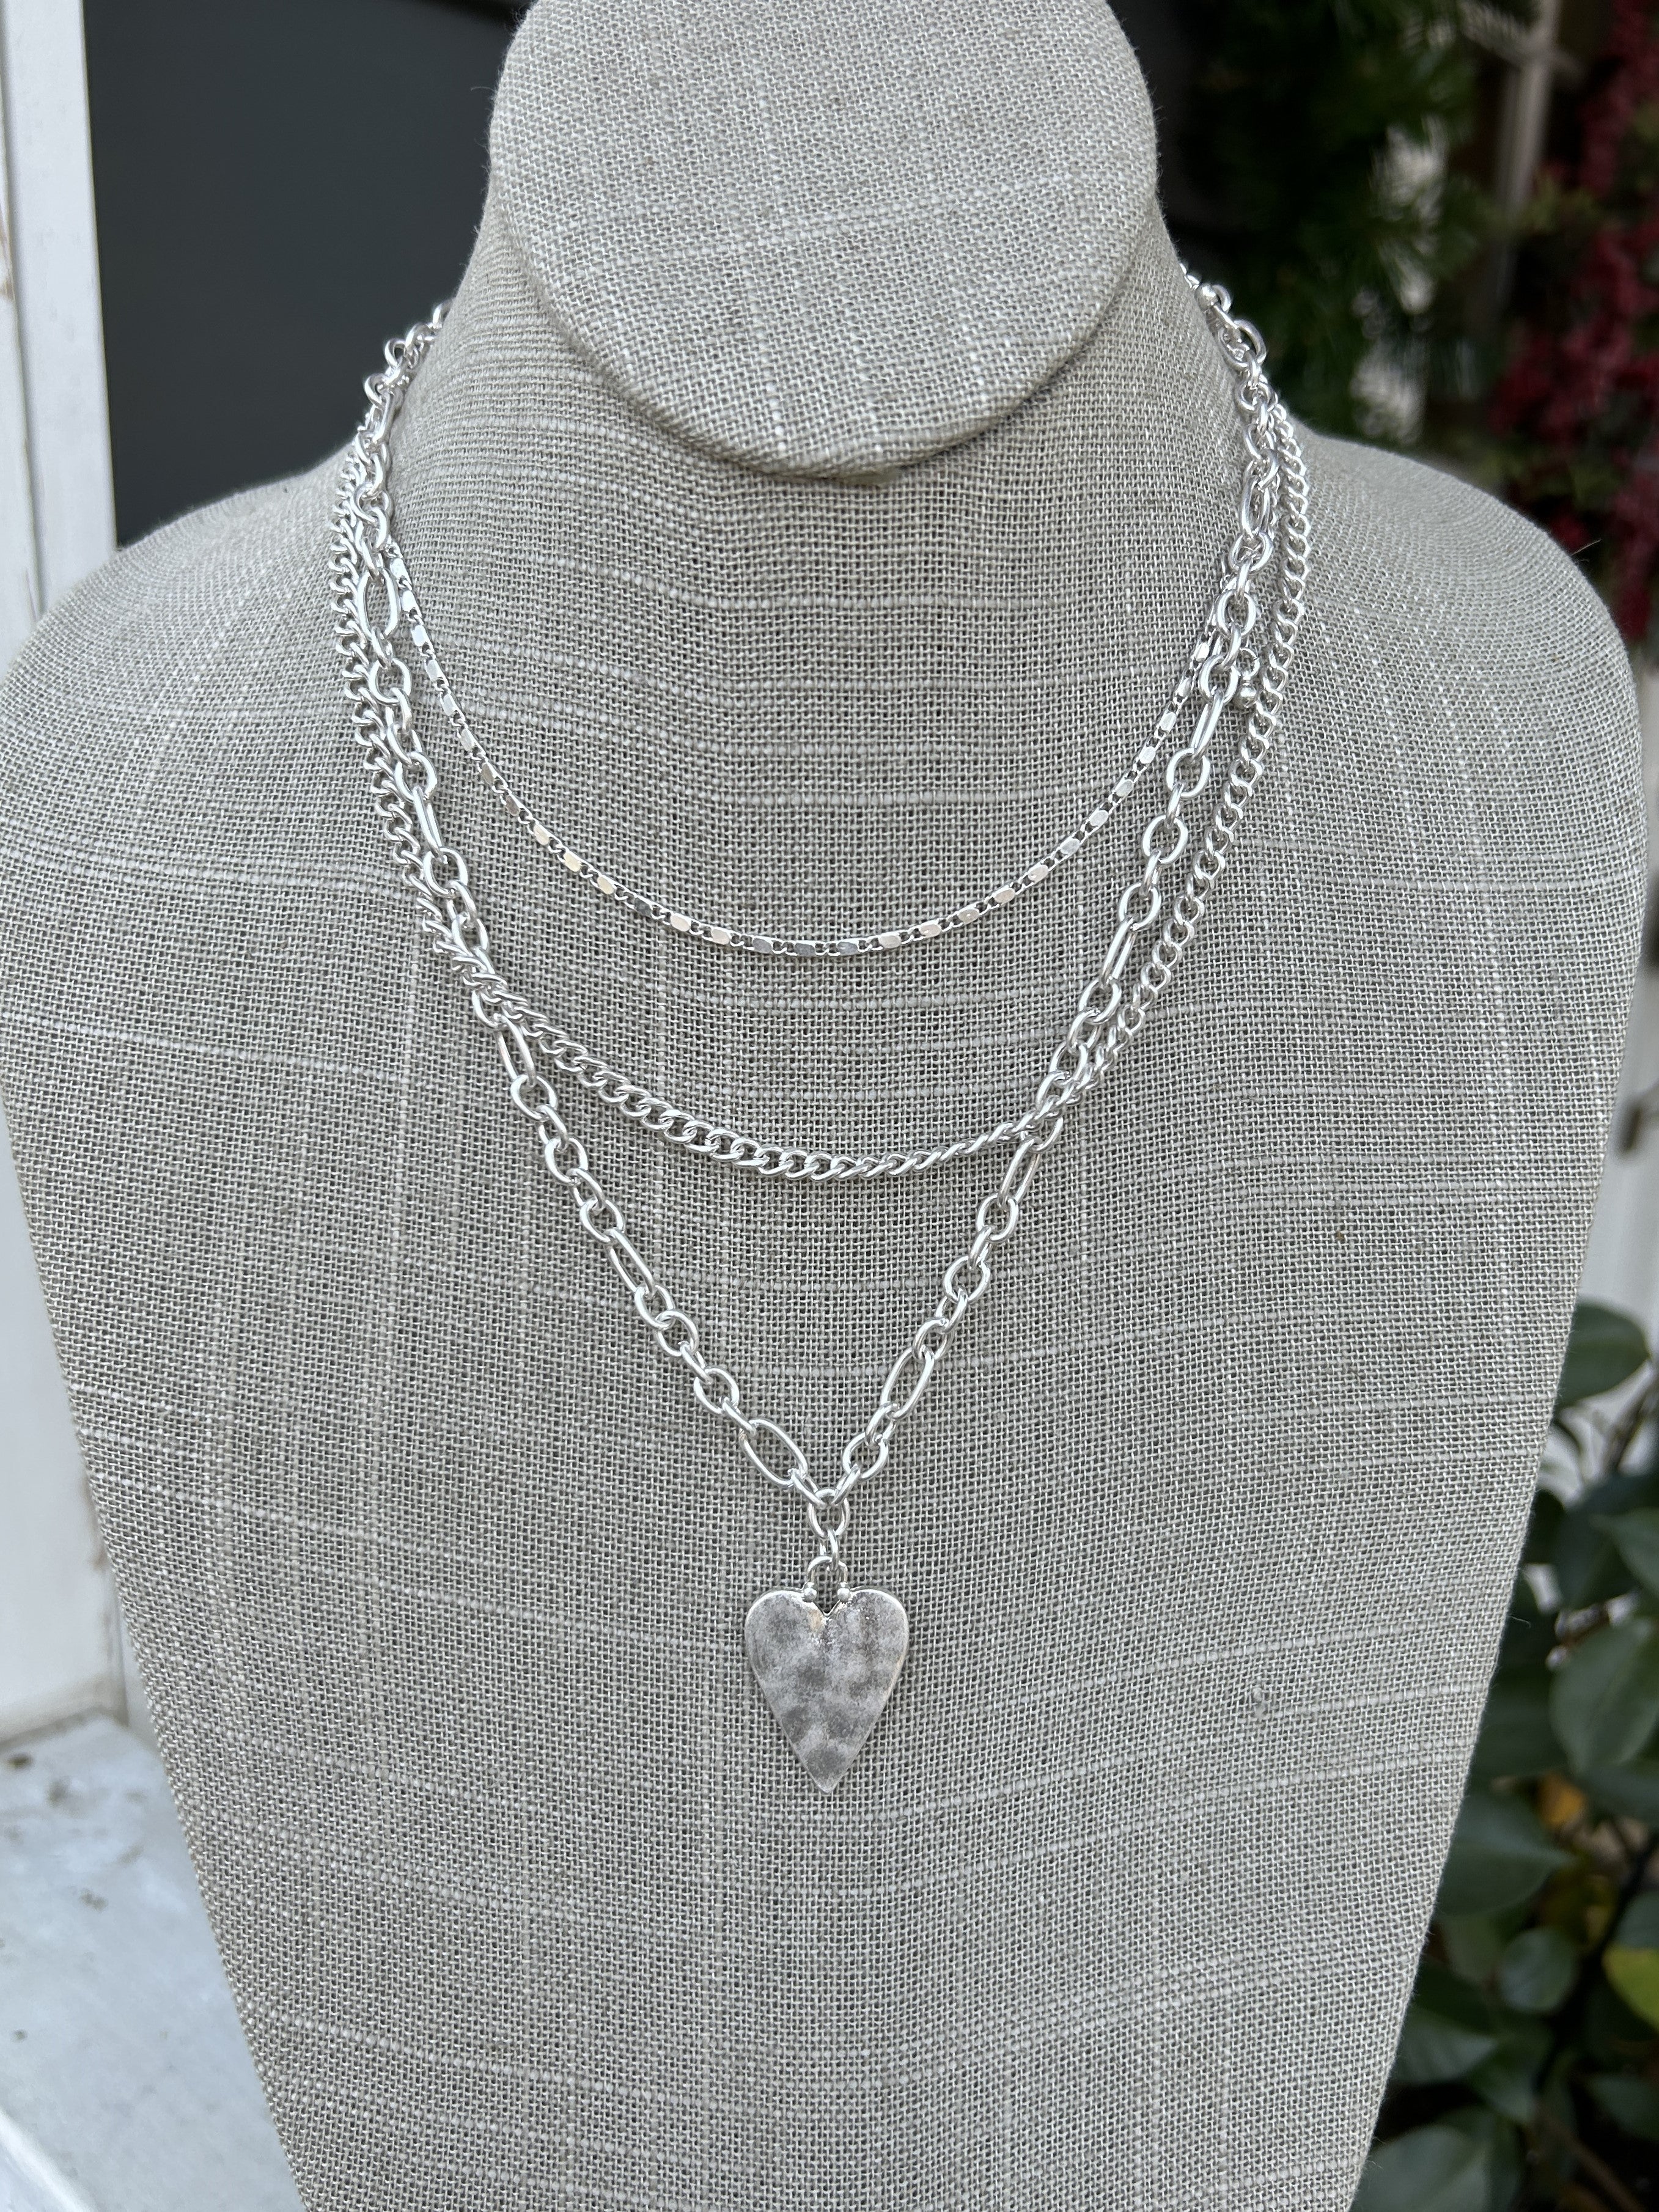 Triple Strand Necklace w/ Heart Pendant